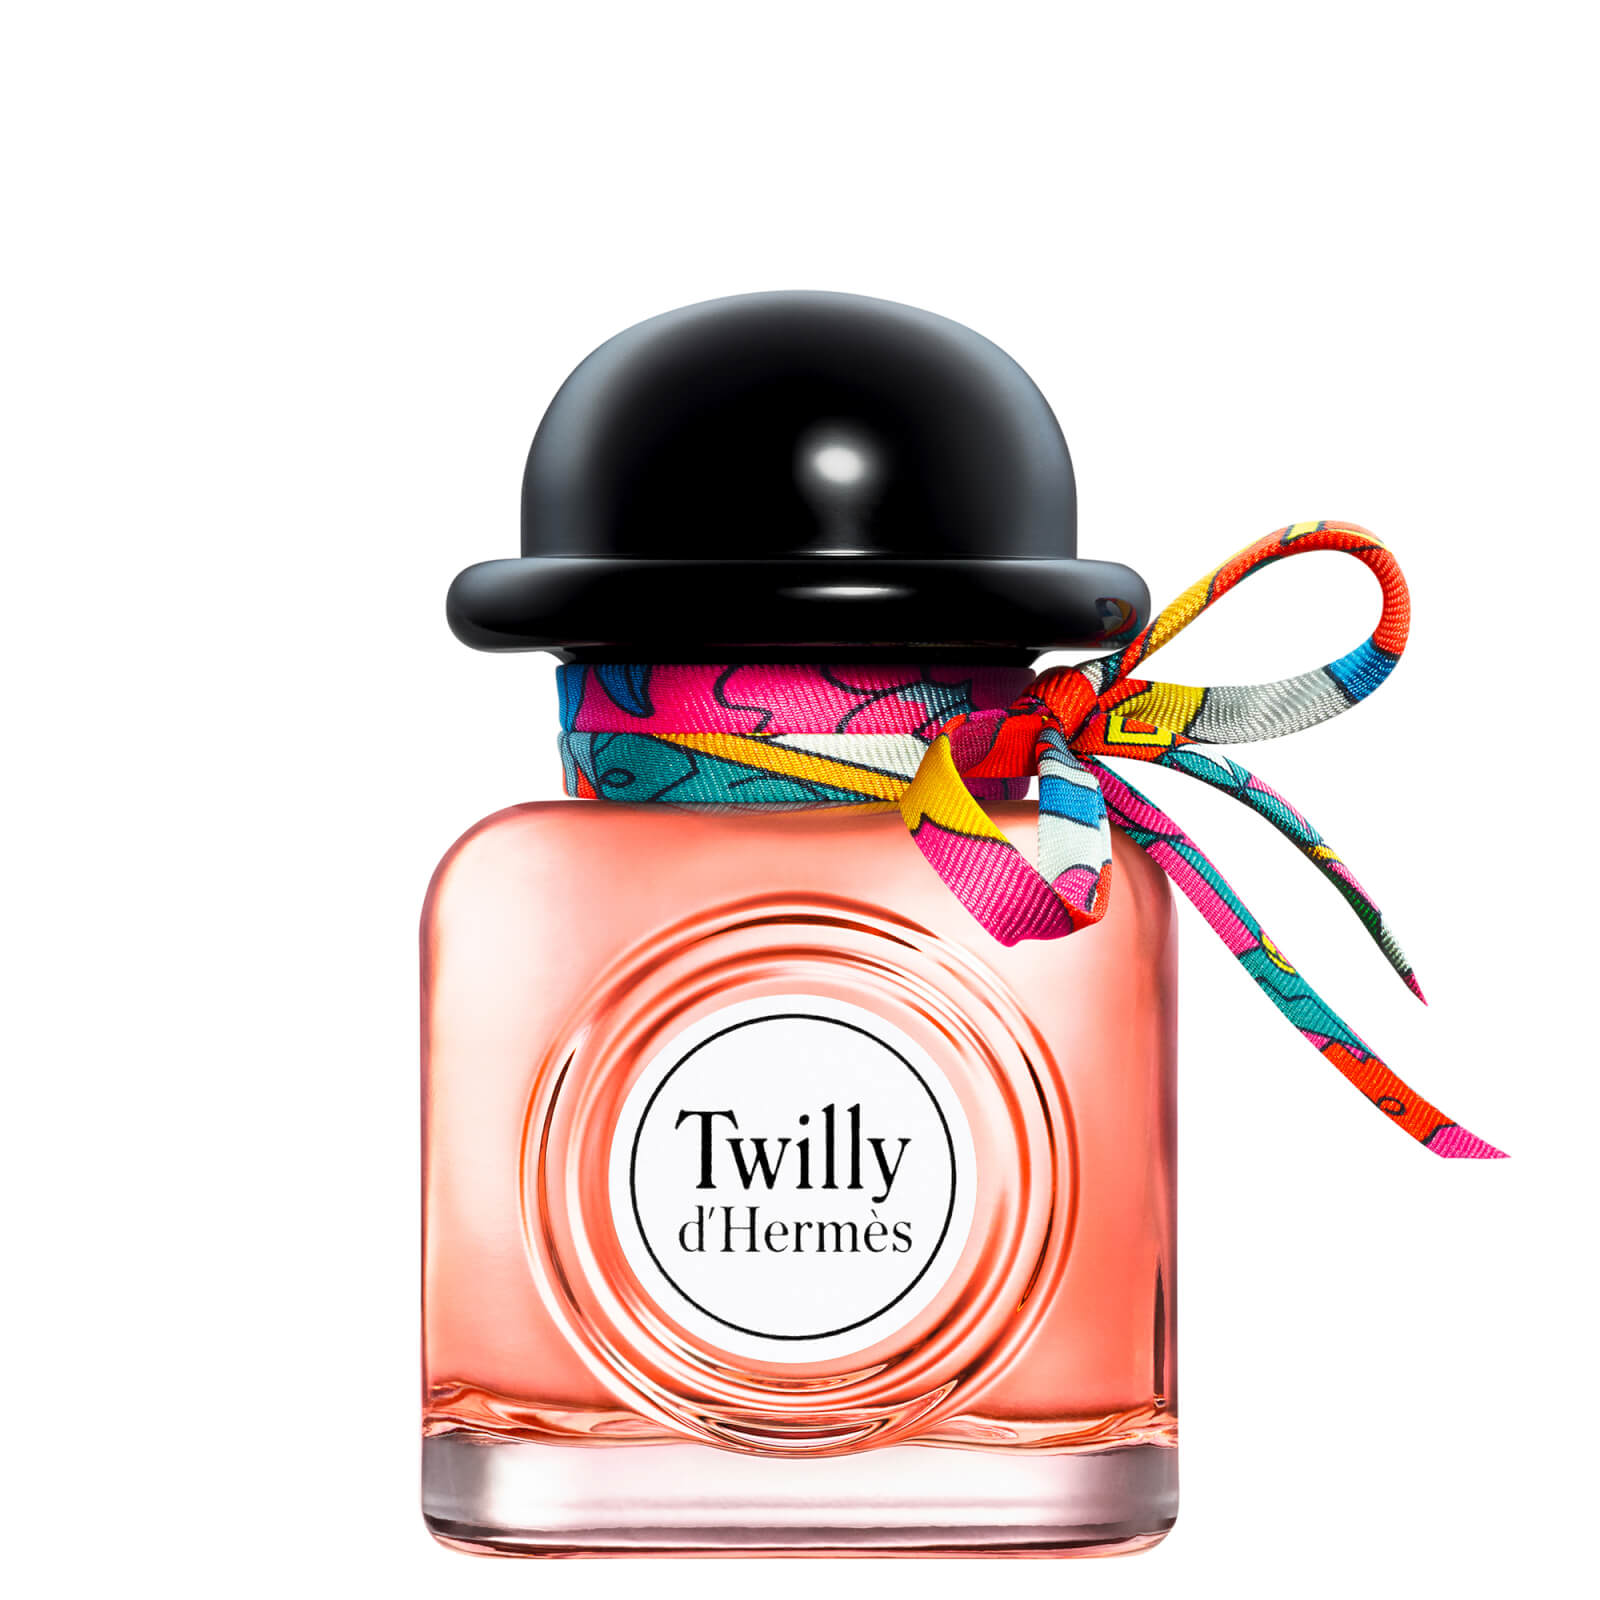 Hermès Twilly d'Hermès Eau de Parfum Natural Spray 85ml